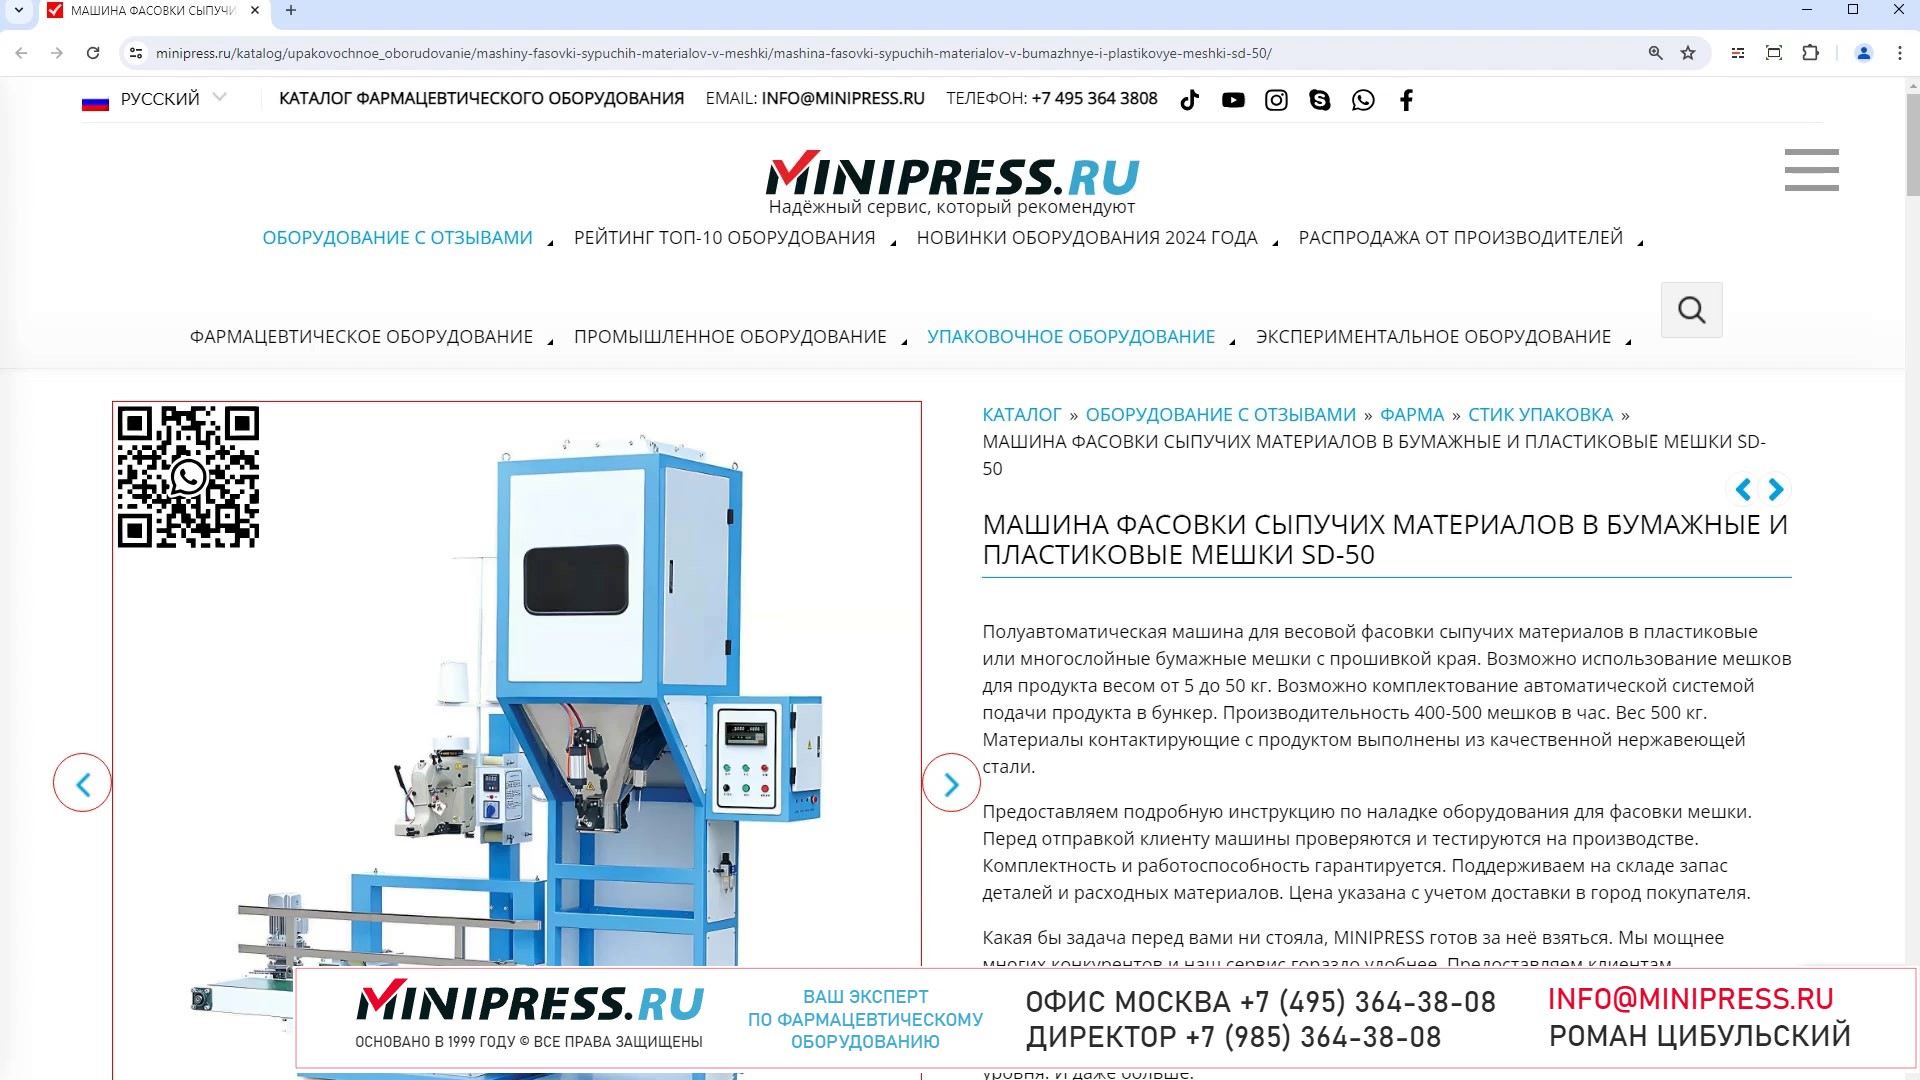 Minipress.ru Машина фасовки сыпучих материалов в бумажные и пластиковые мешки SD-50